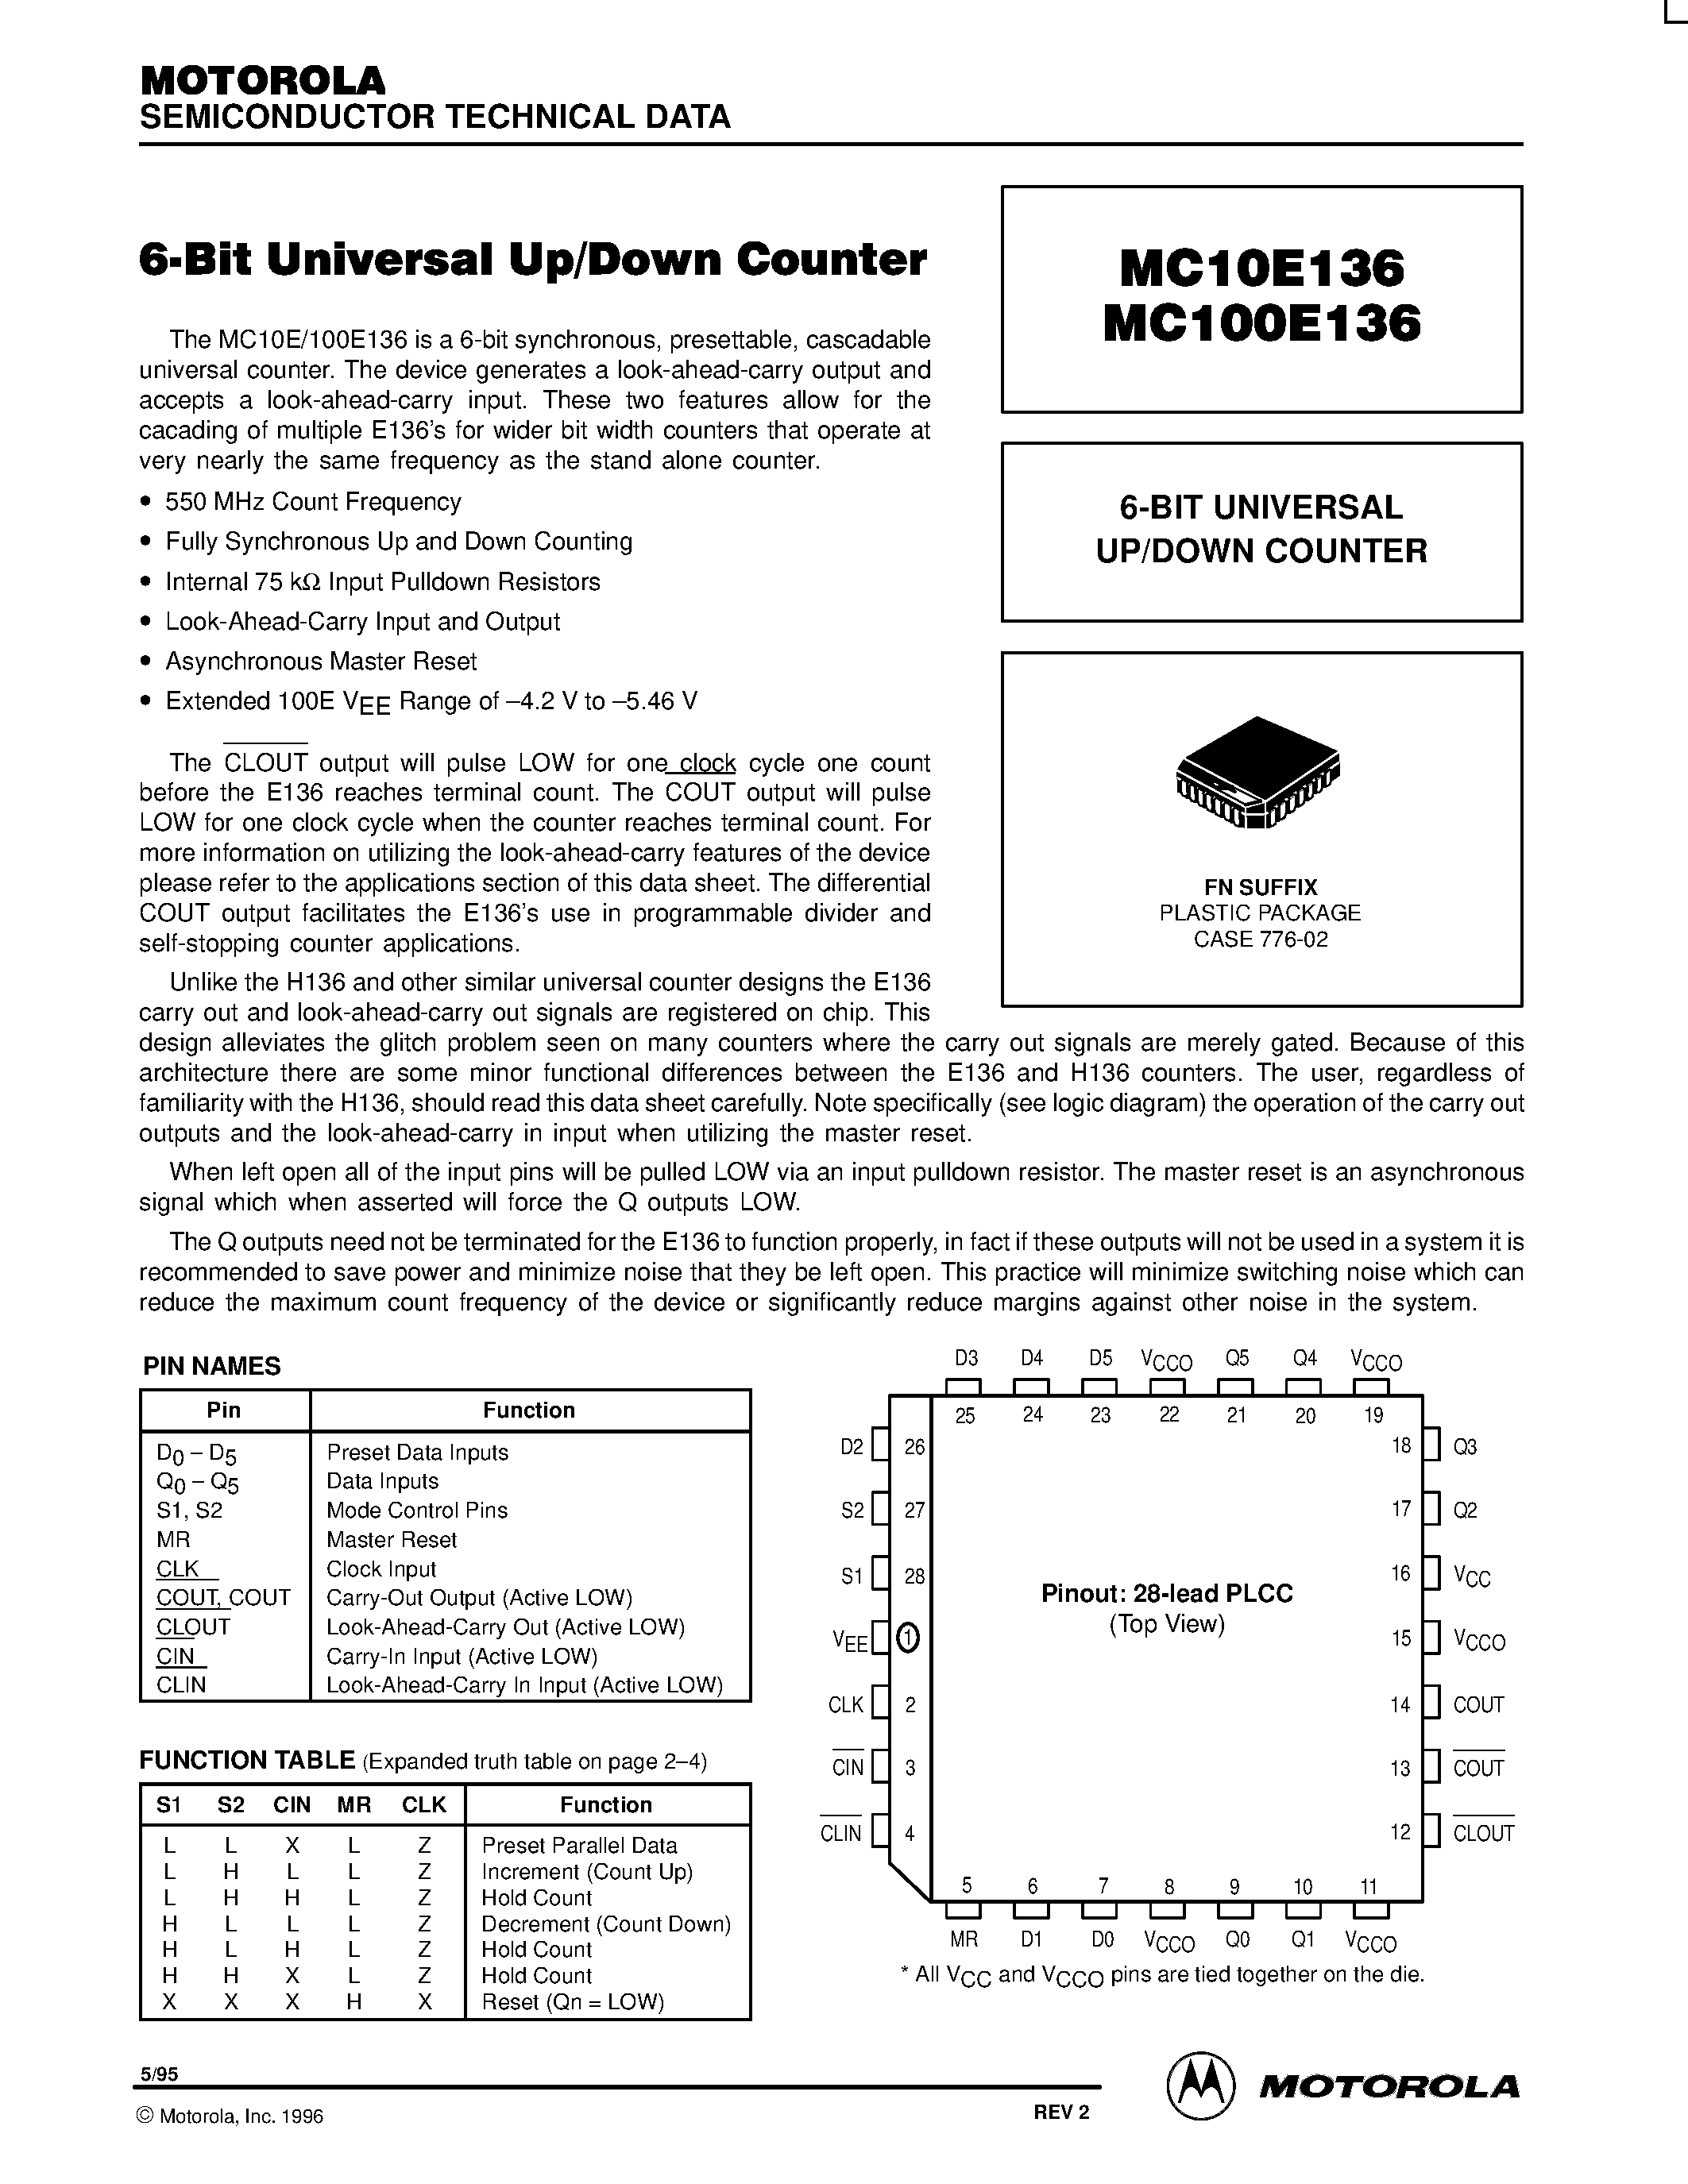 Datasheet MC100E136FN - 6-BIT UNIVERSAL UP/DOWN COUNTER page 1